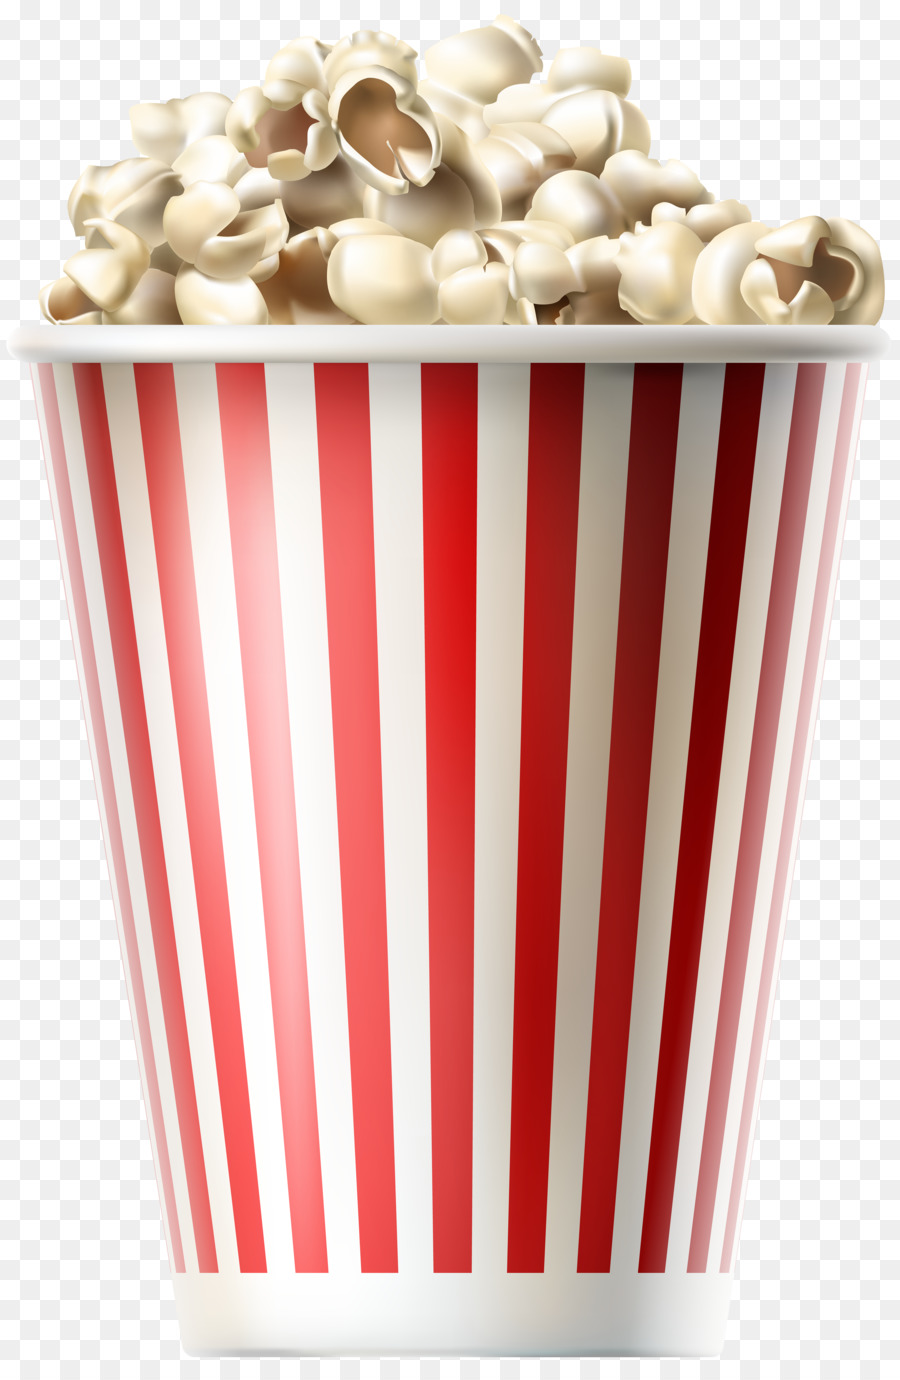 Popcorn Kino Film Clip art - Popcorn